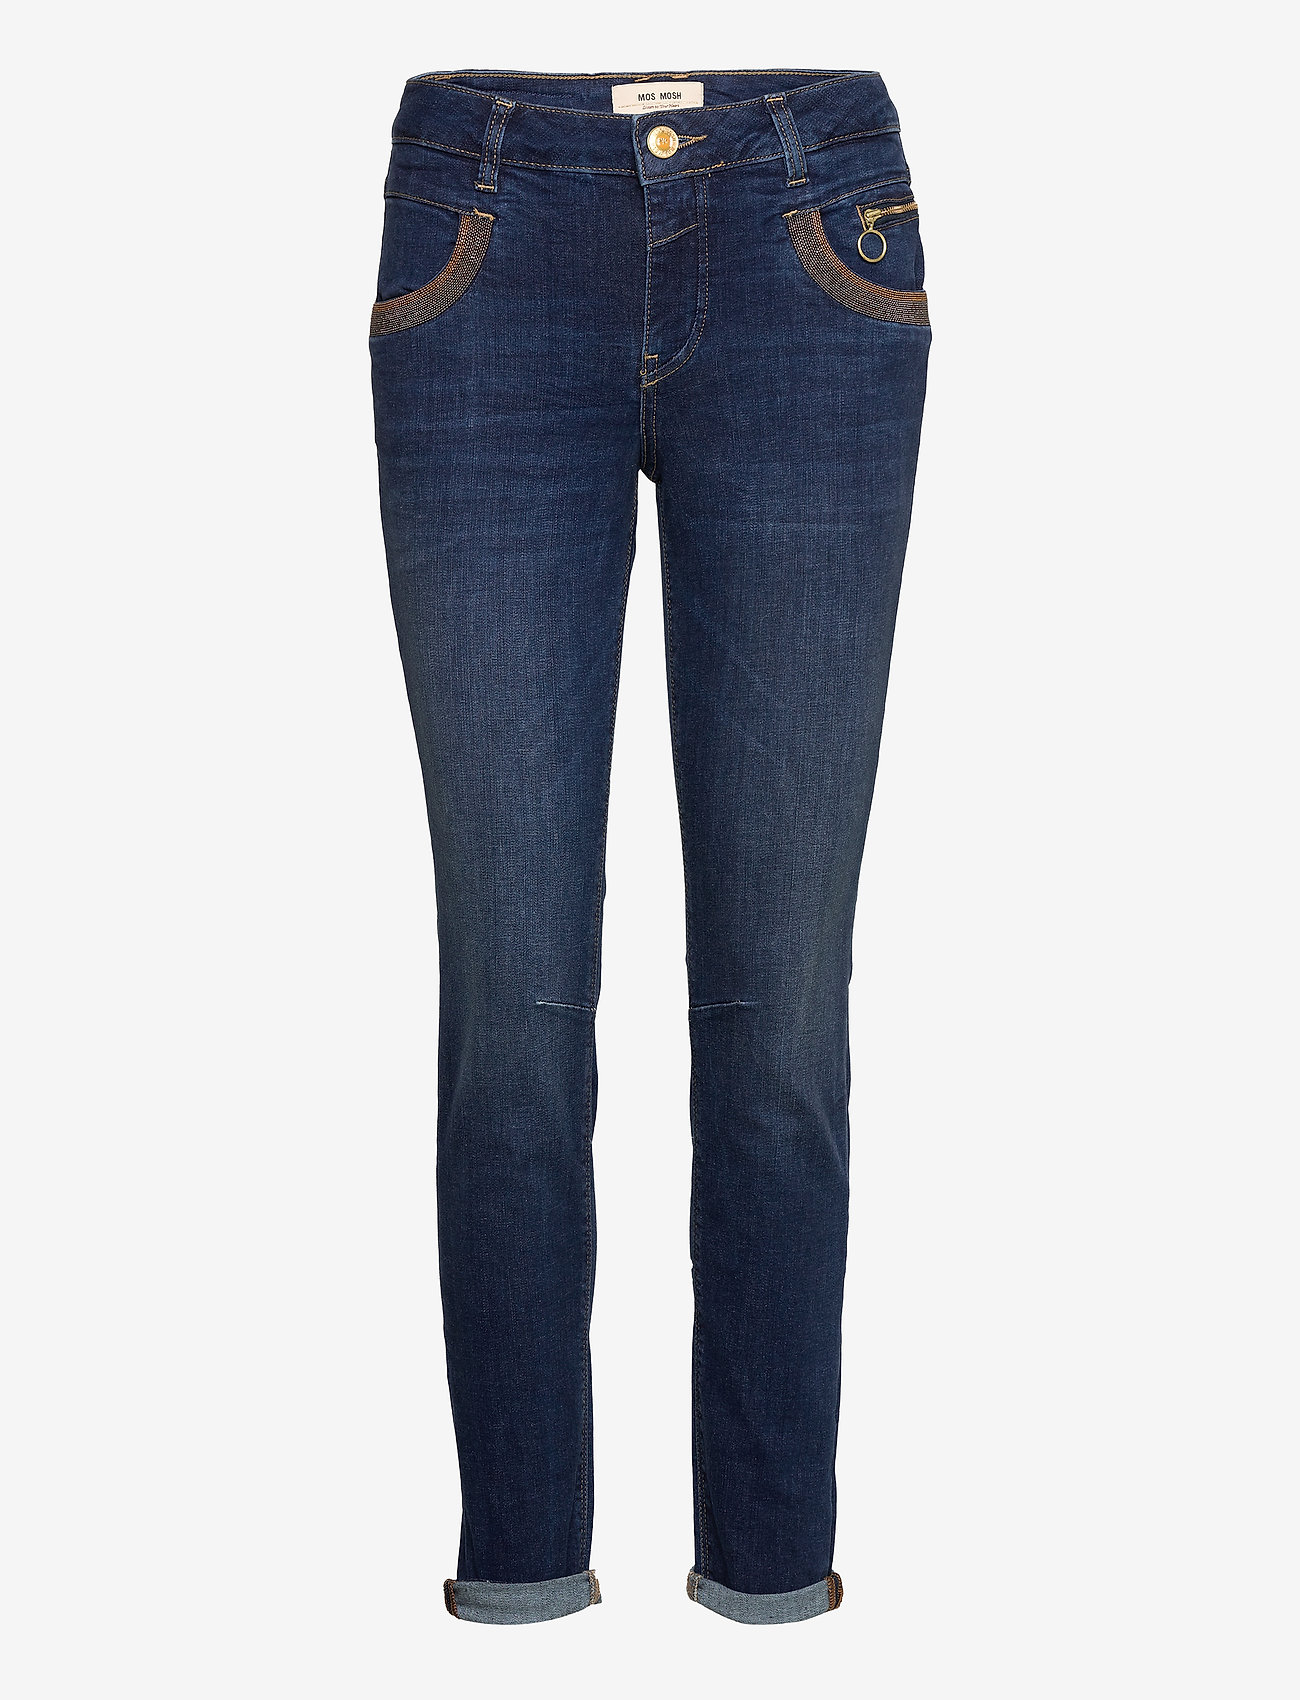 MOS MOSH Naomi Shade Blue Jeans - Skinny jeans | Boozt.com